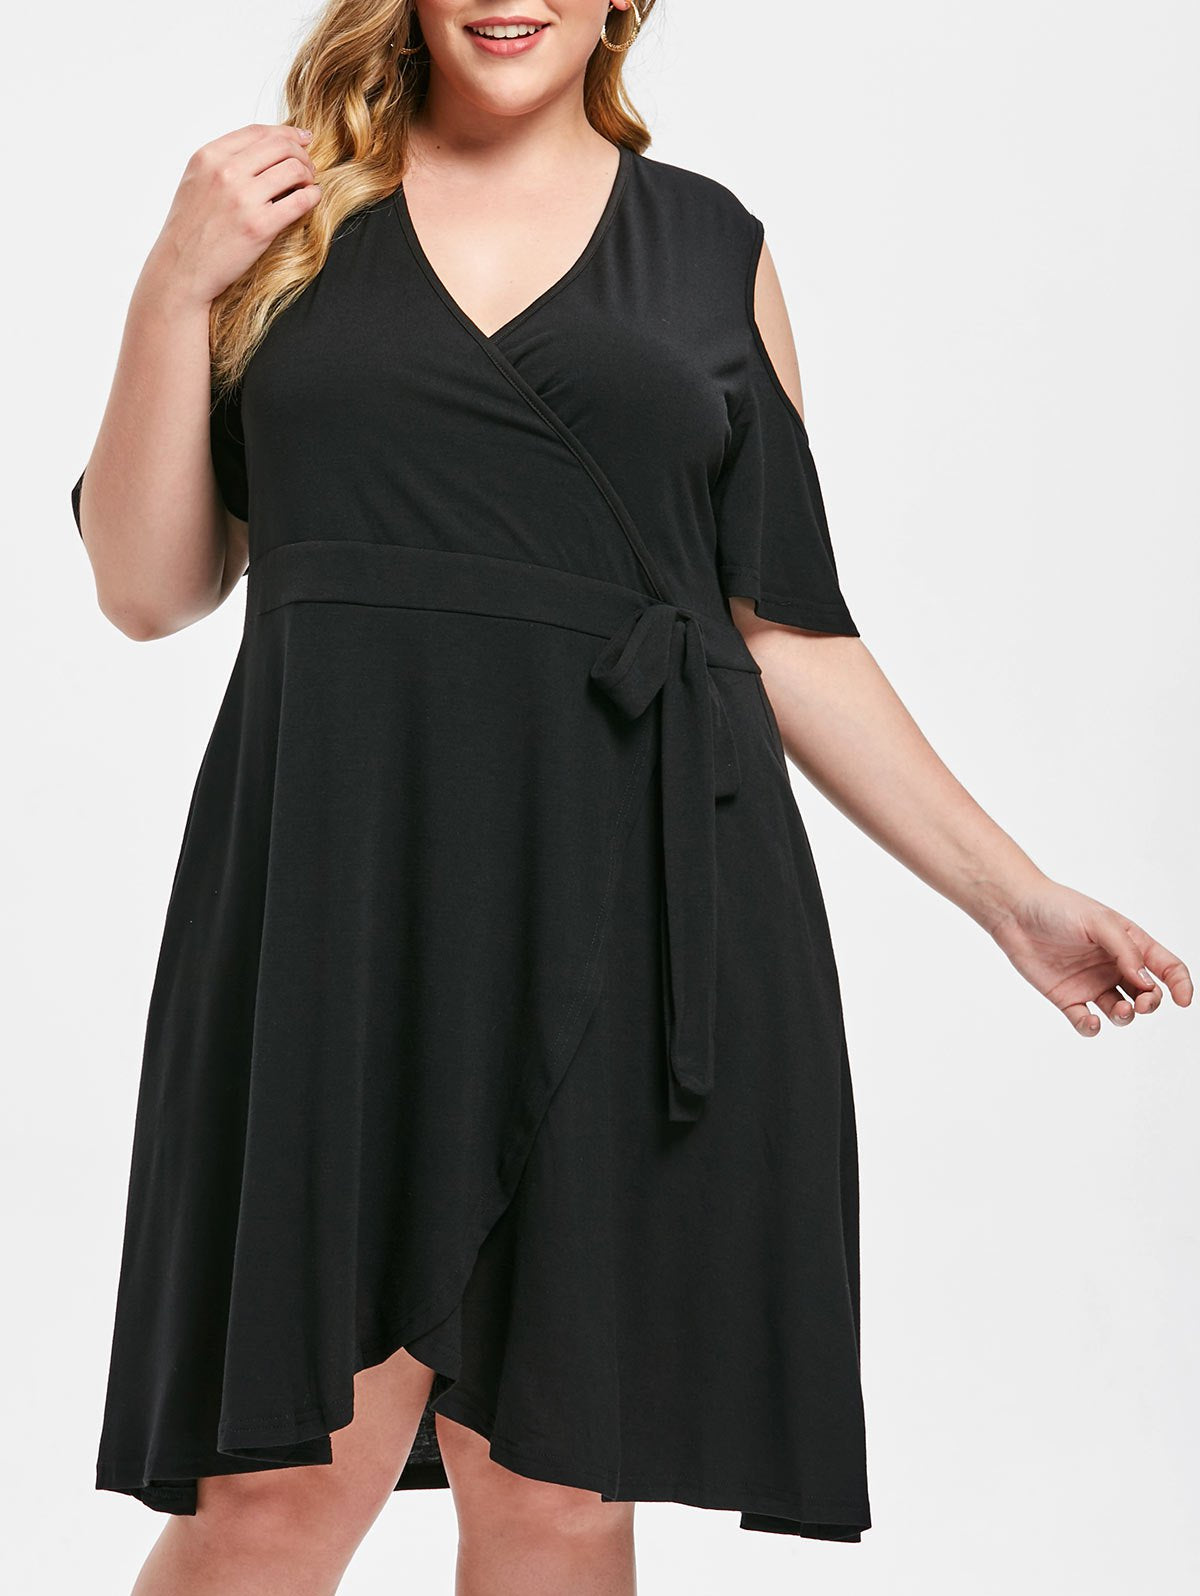 Cold Shoulder Plus Size Fit and Flare Dress | bestdress1.com